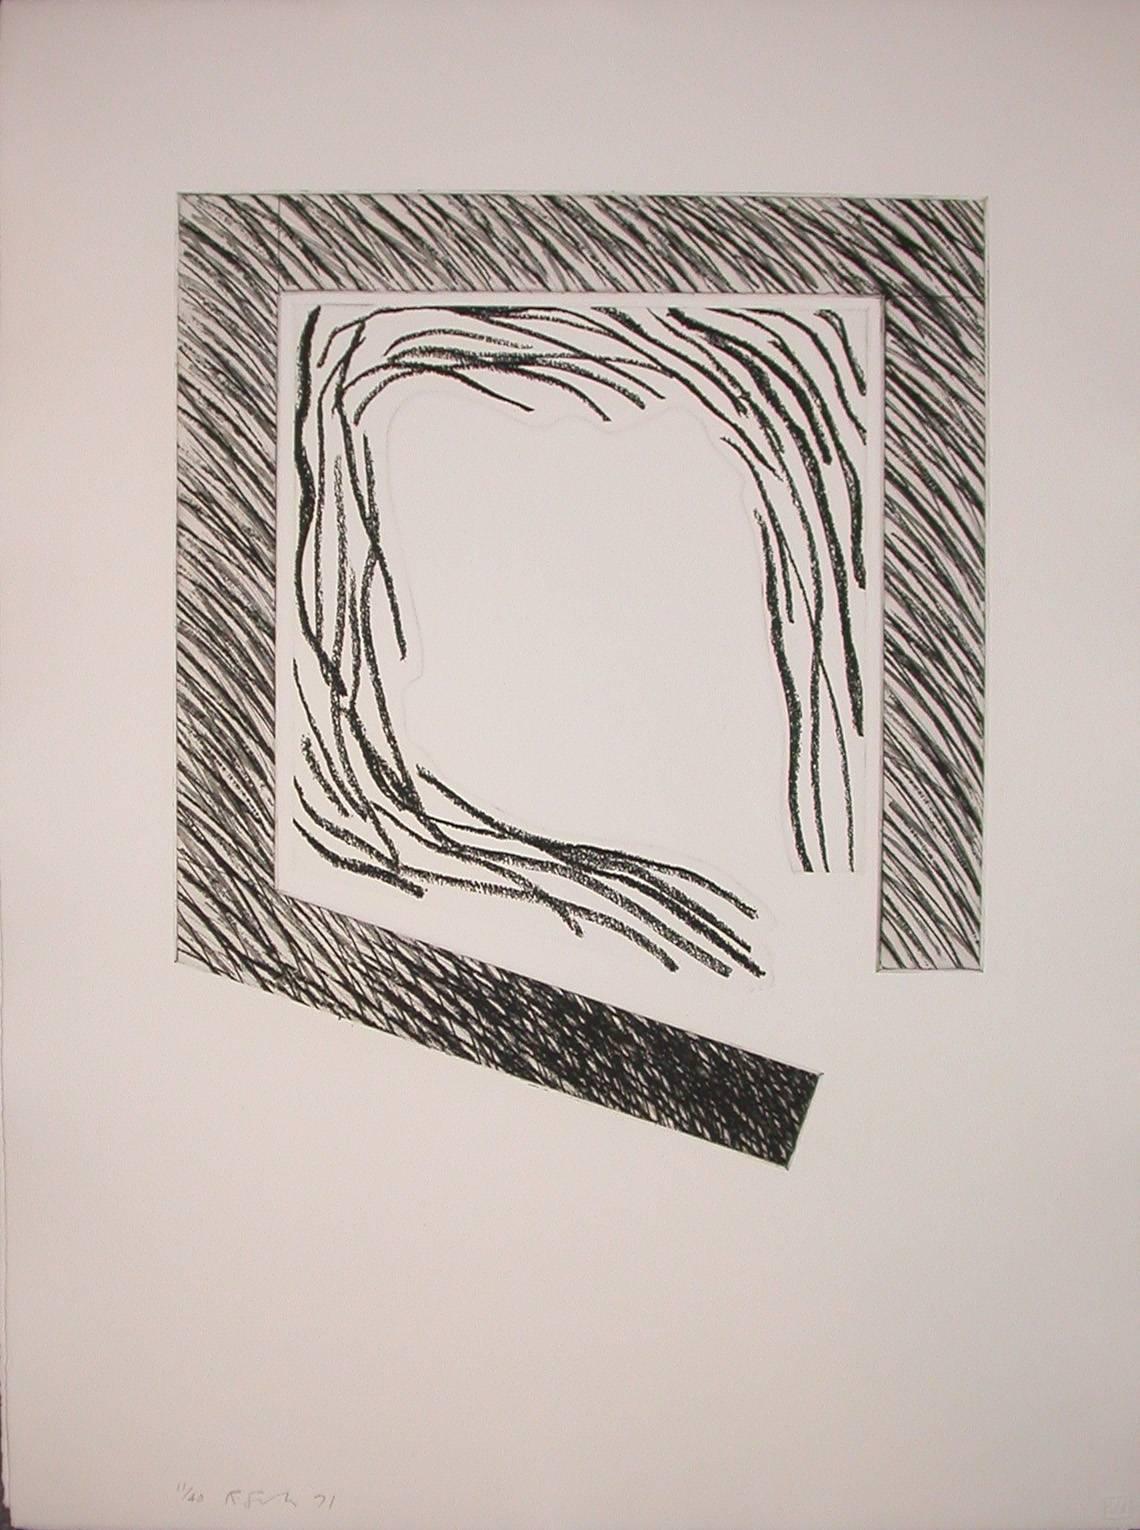 Richard Smith Print - Proscenium I (square border around loose lines)